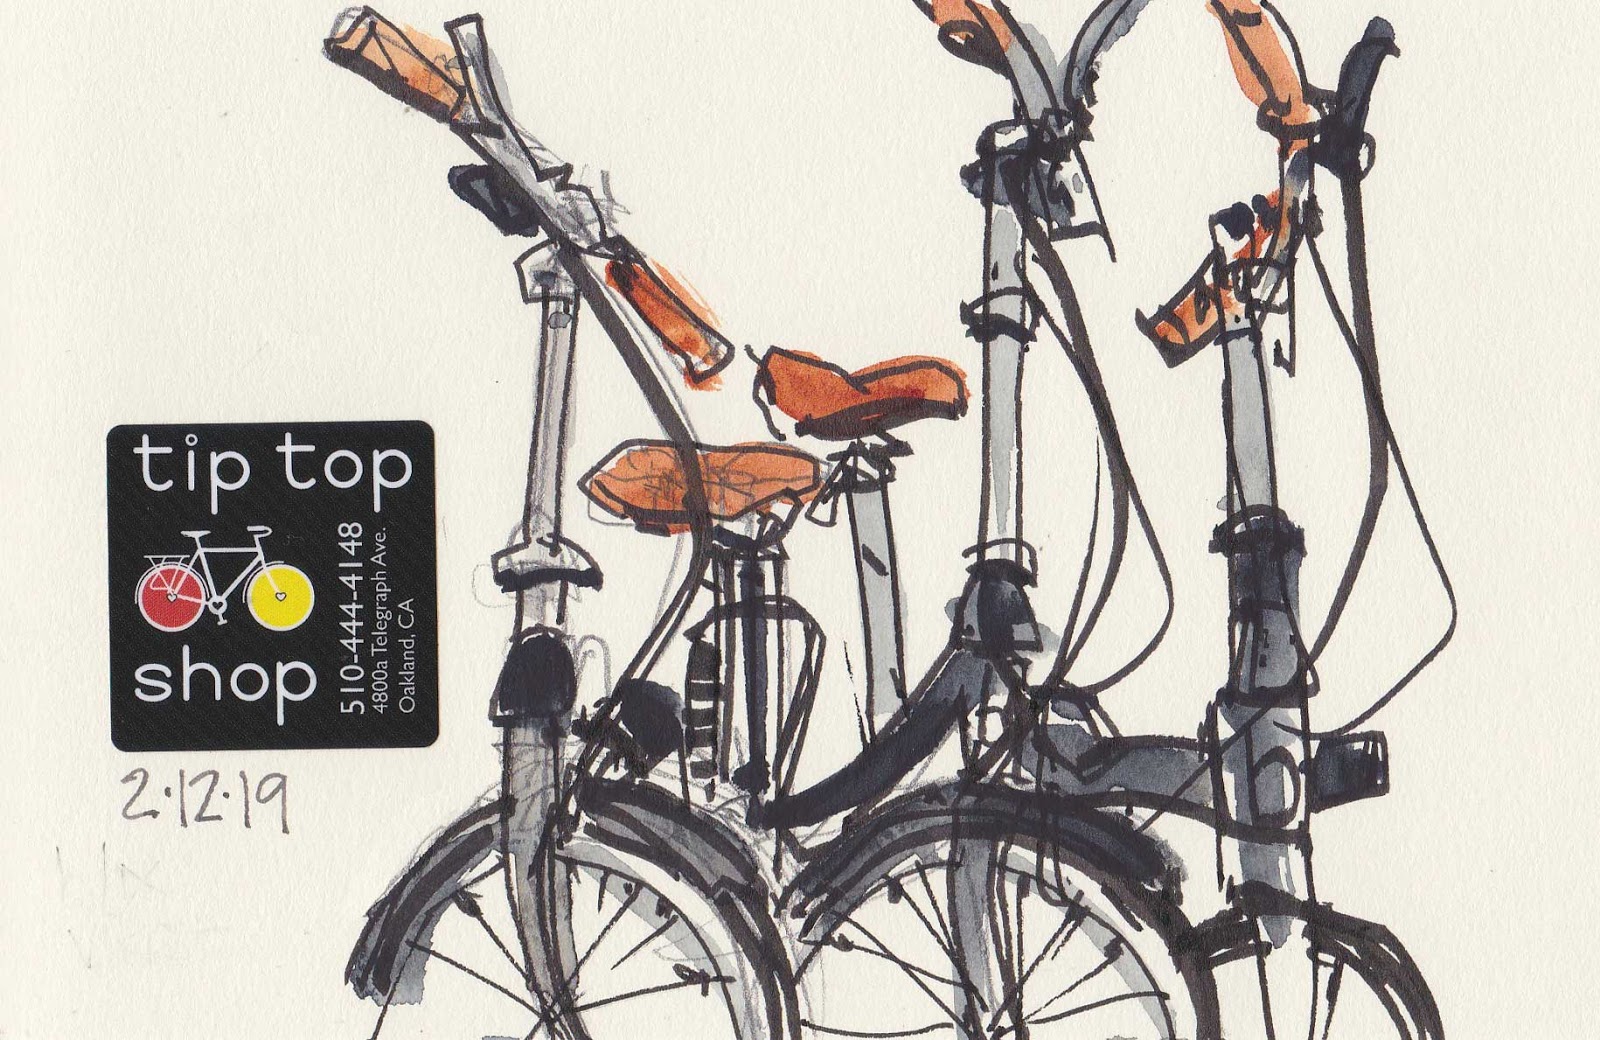 Sketchers S.F. Bay Area: Tip Top Sketching at Tip Top Bike Shop